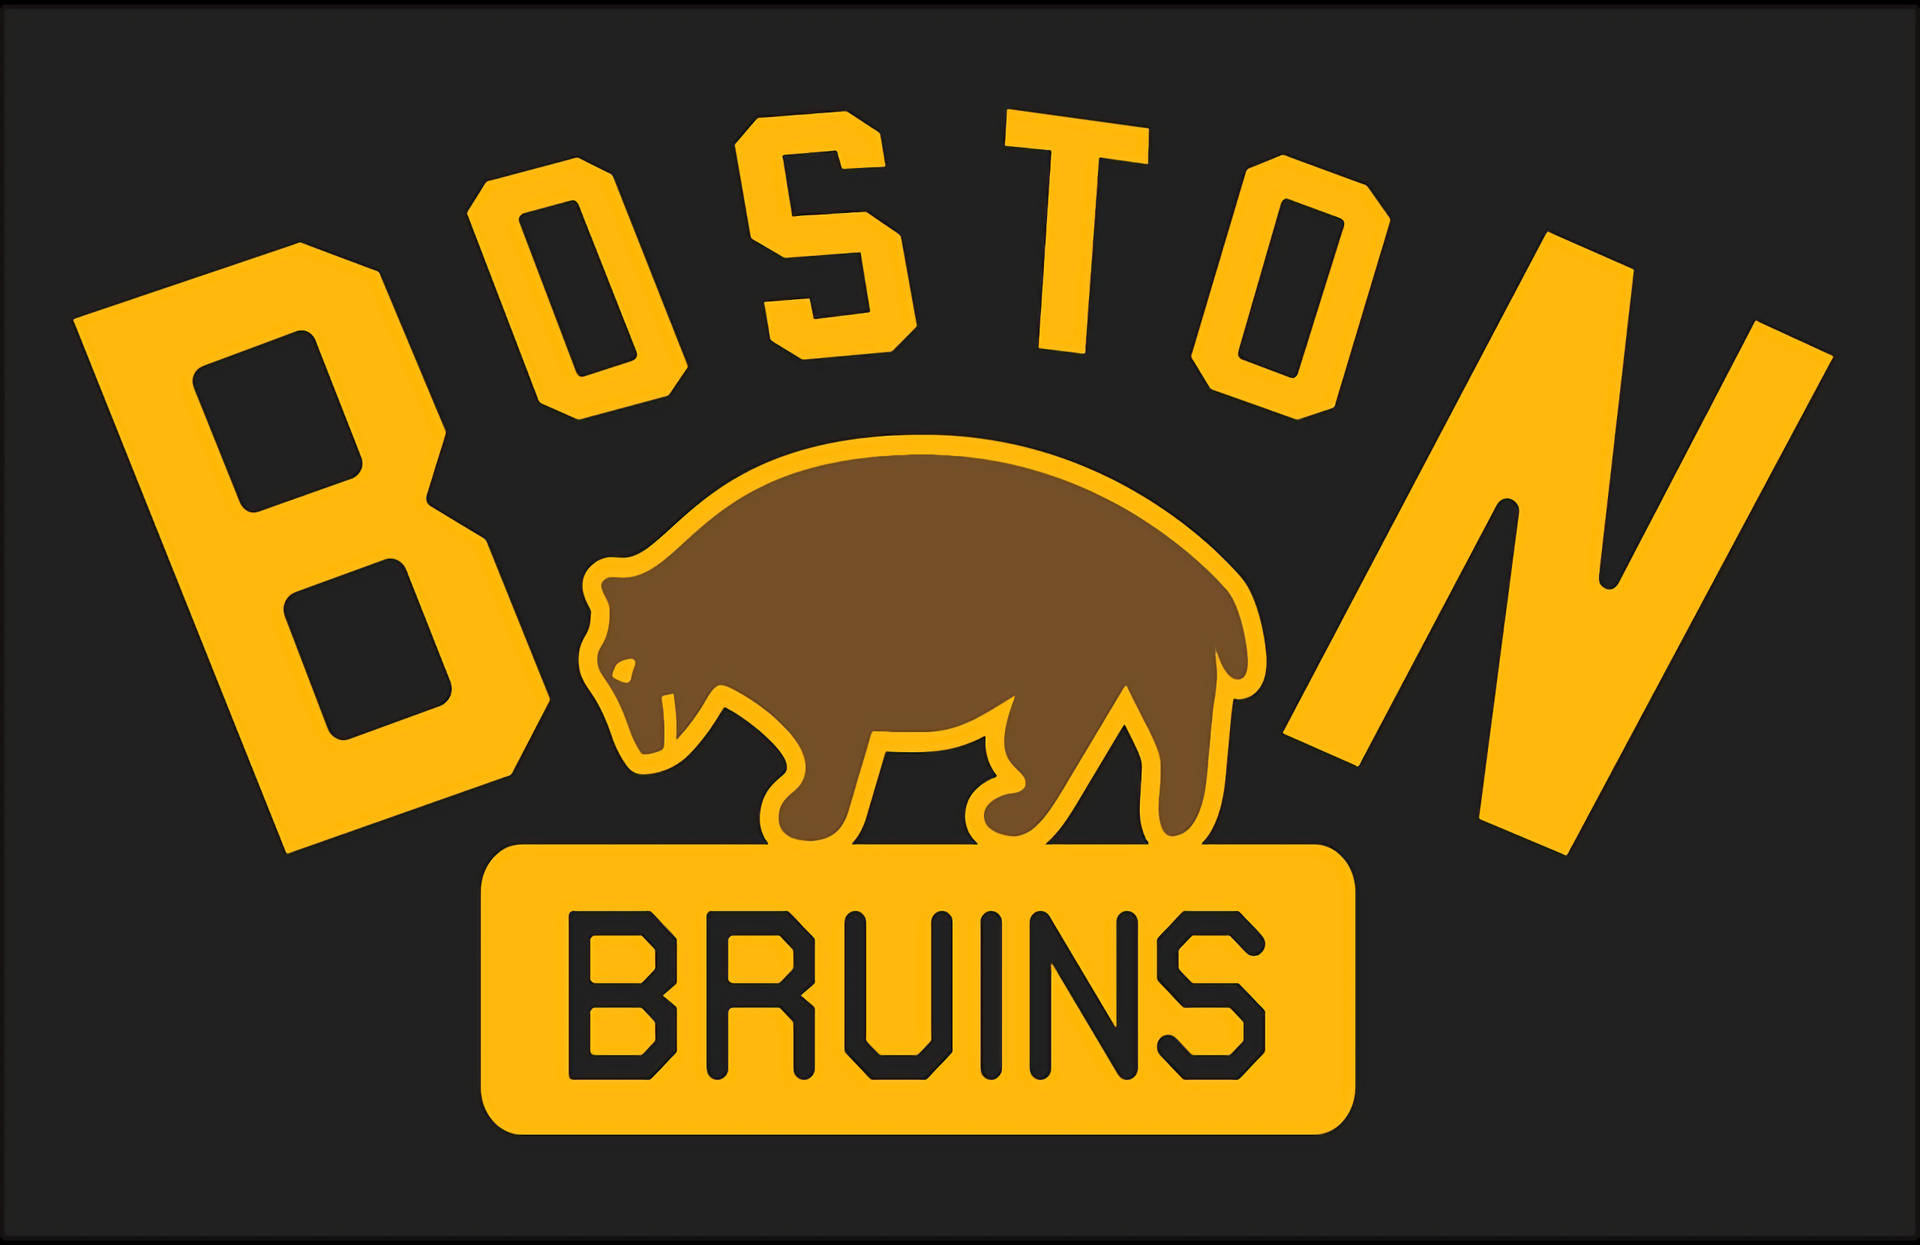 Majestic Boston Bruins Logo Wallpaper